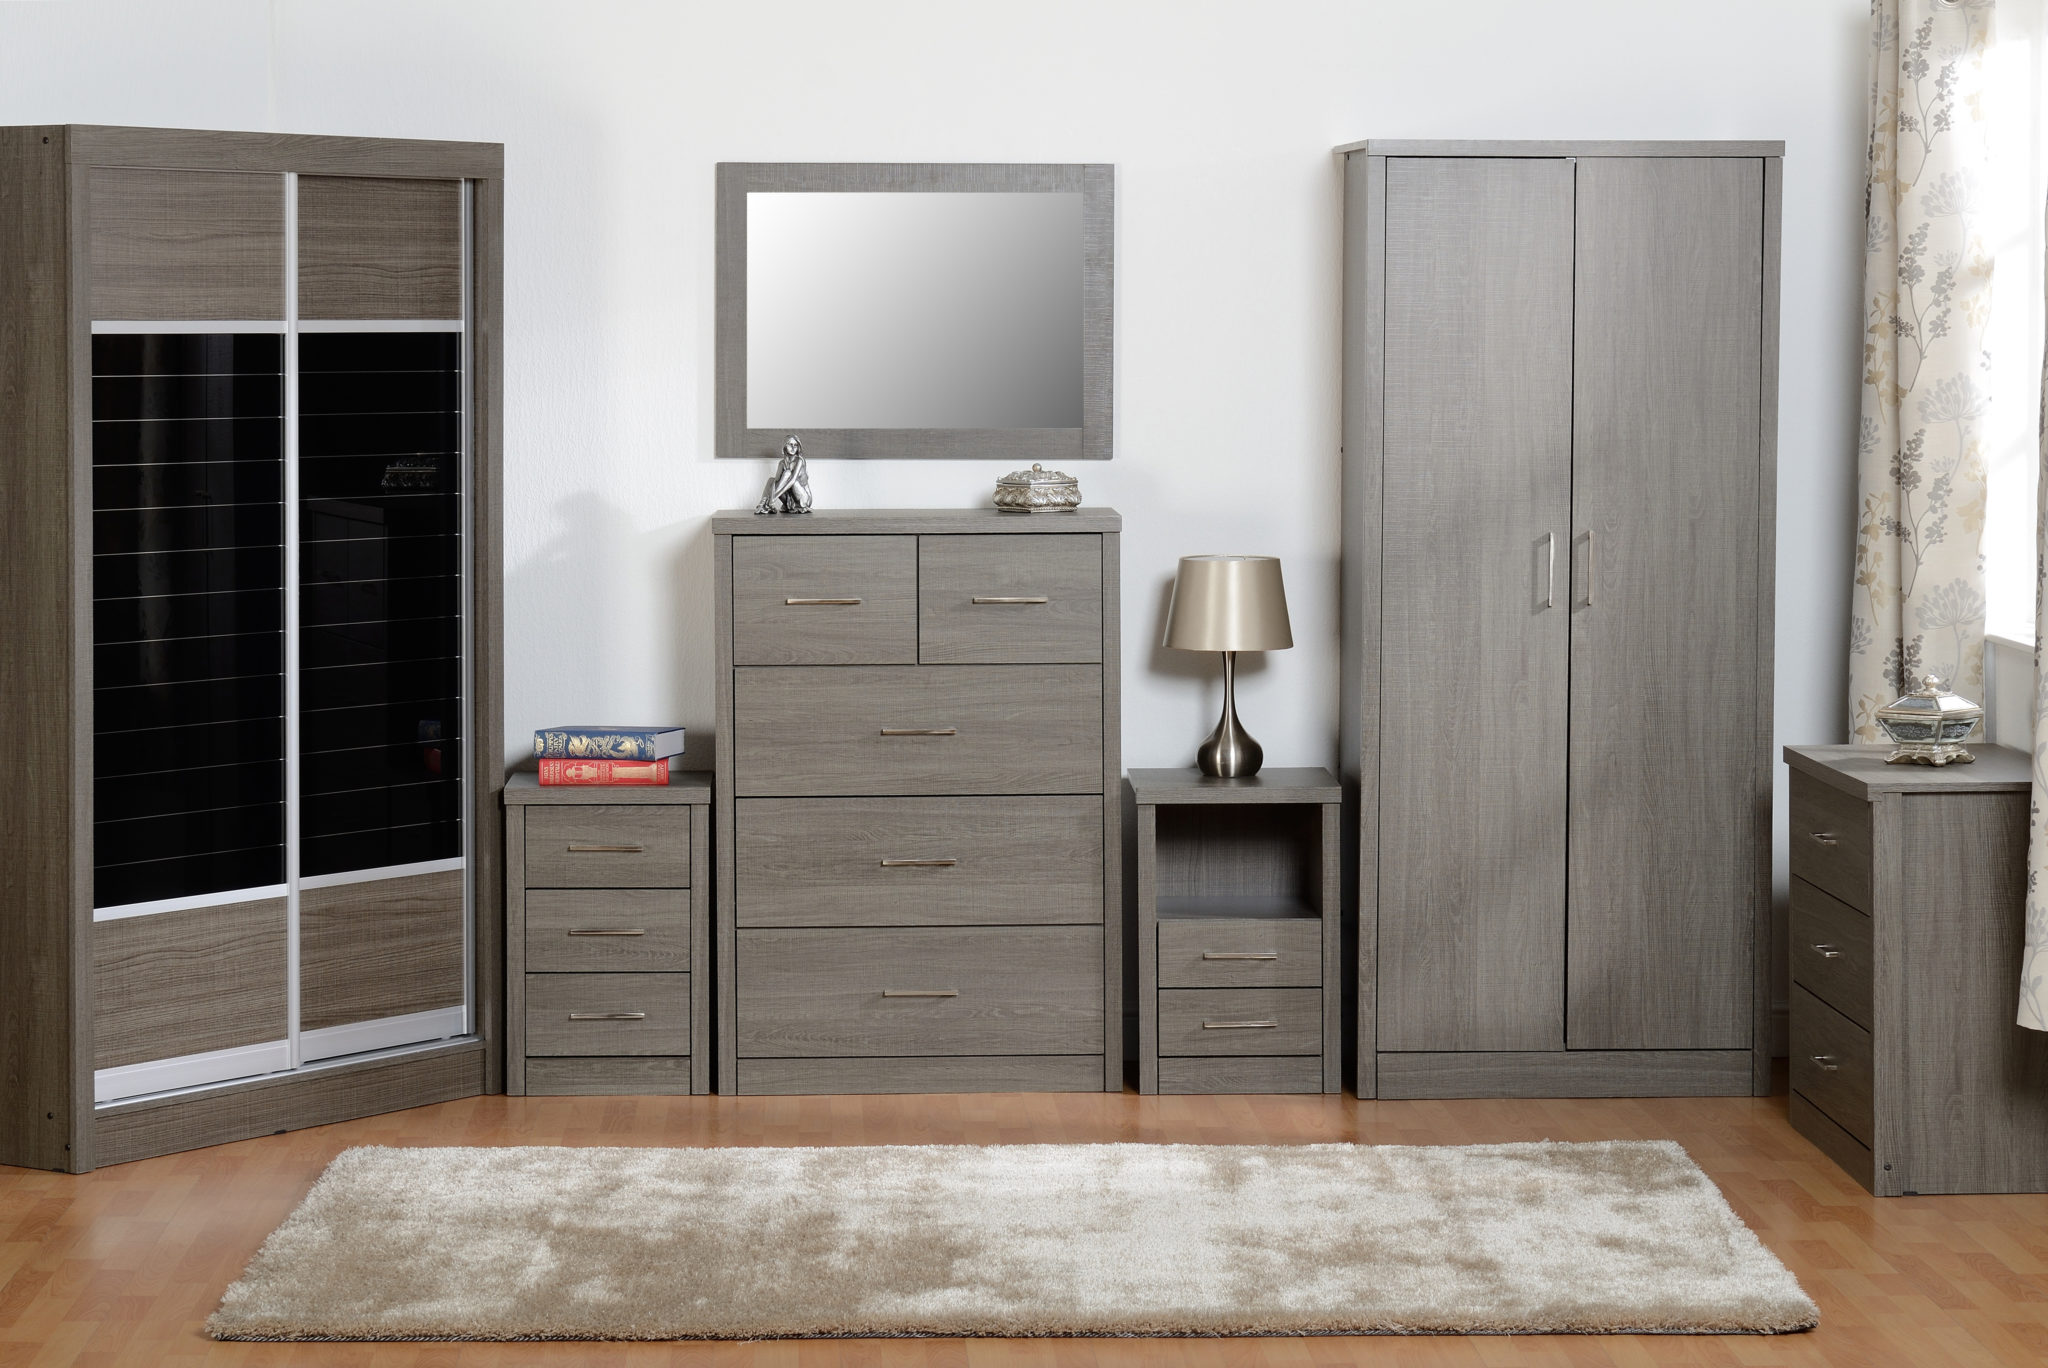 lisbon oakita bedroom furniture uk